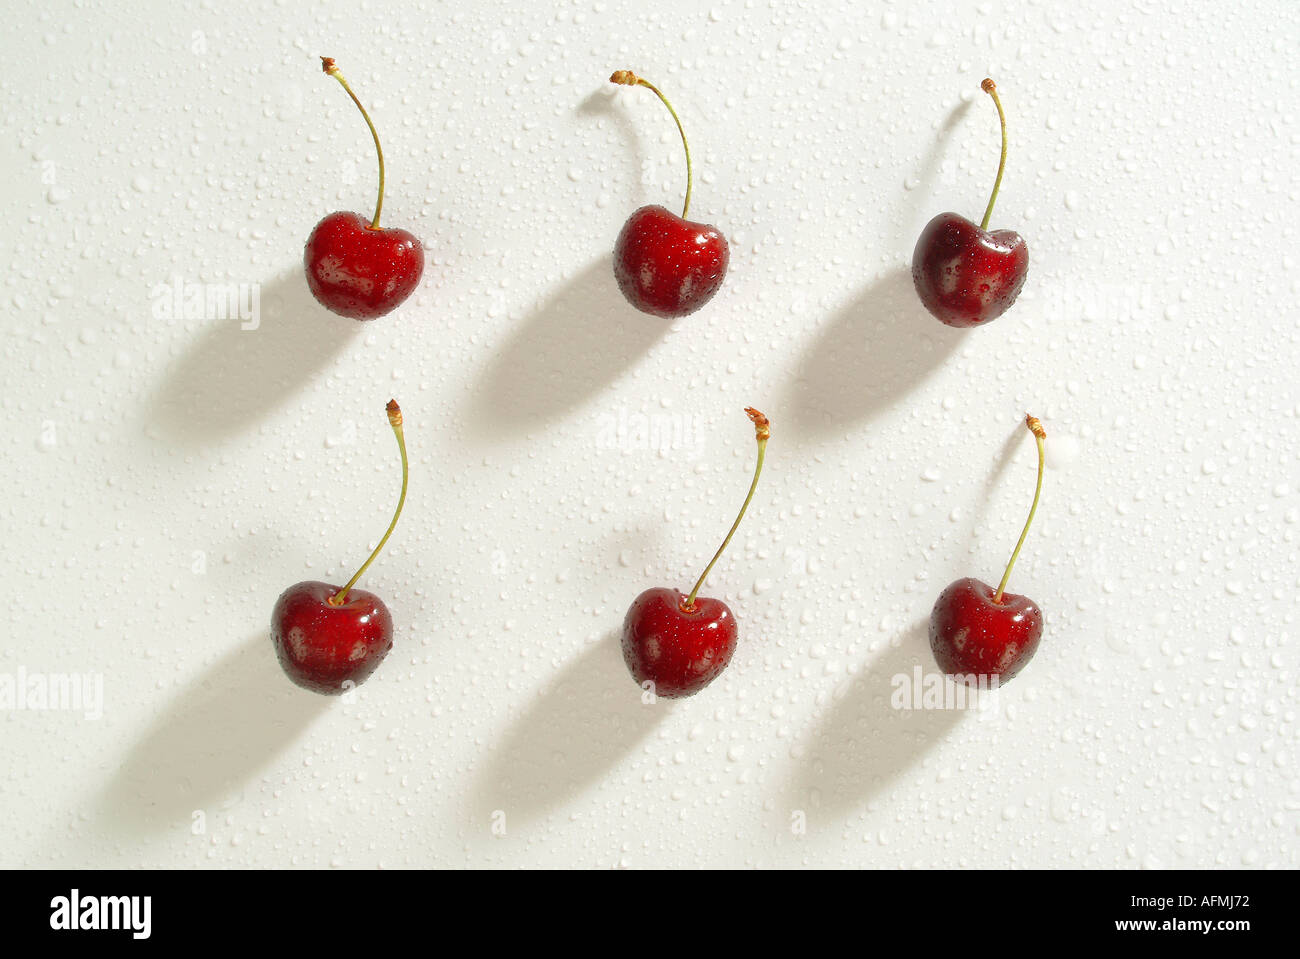 6 cherries 6 Kirschen Stock Photo